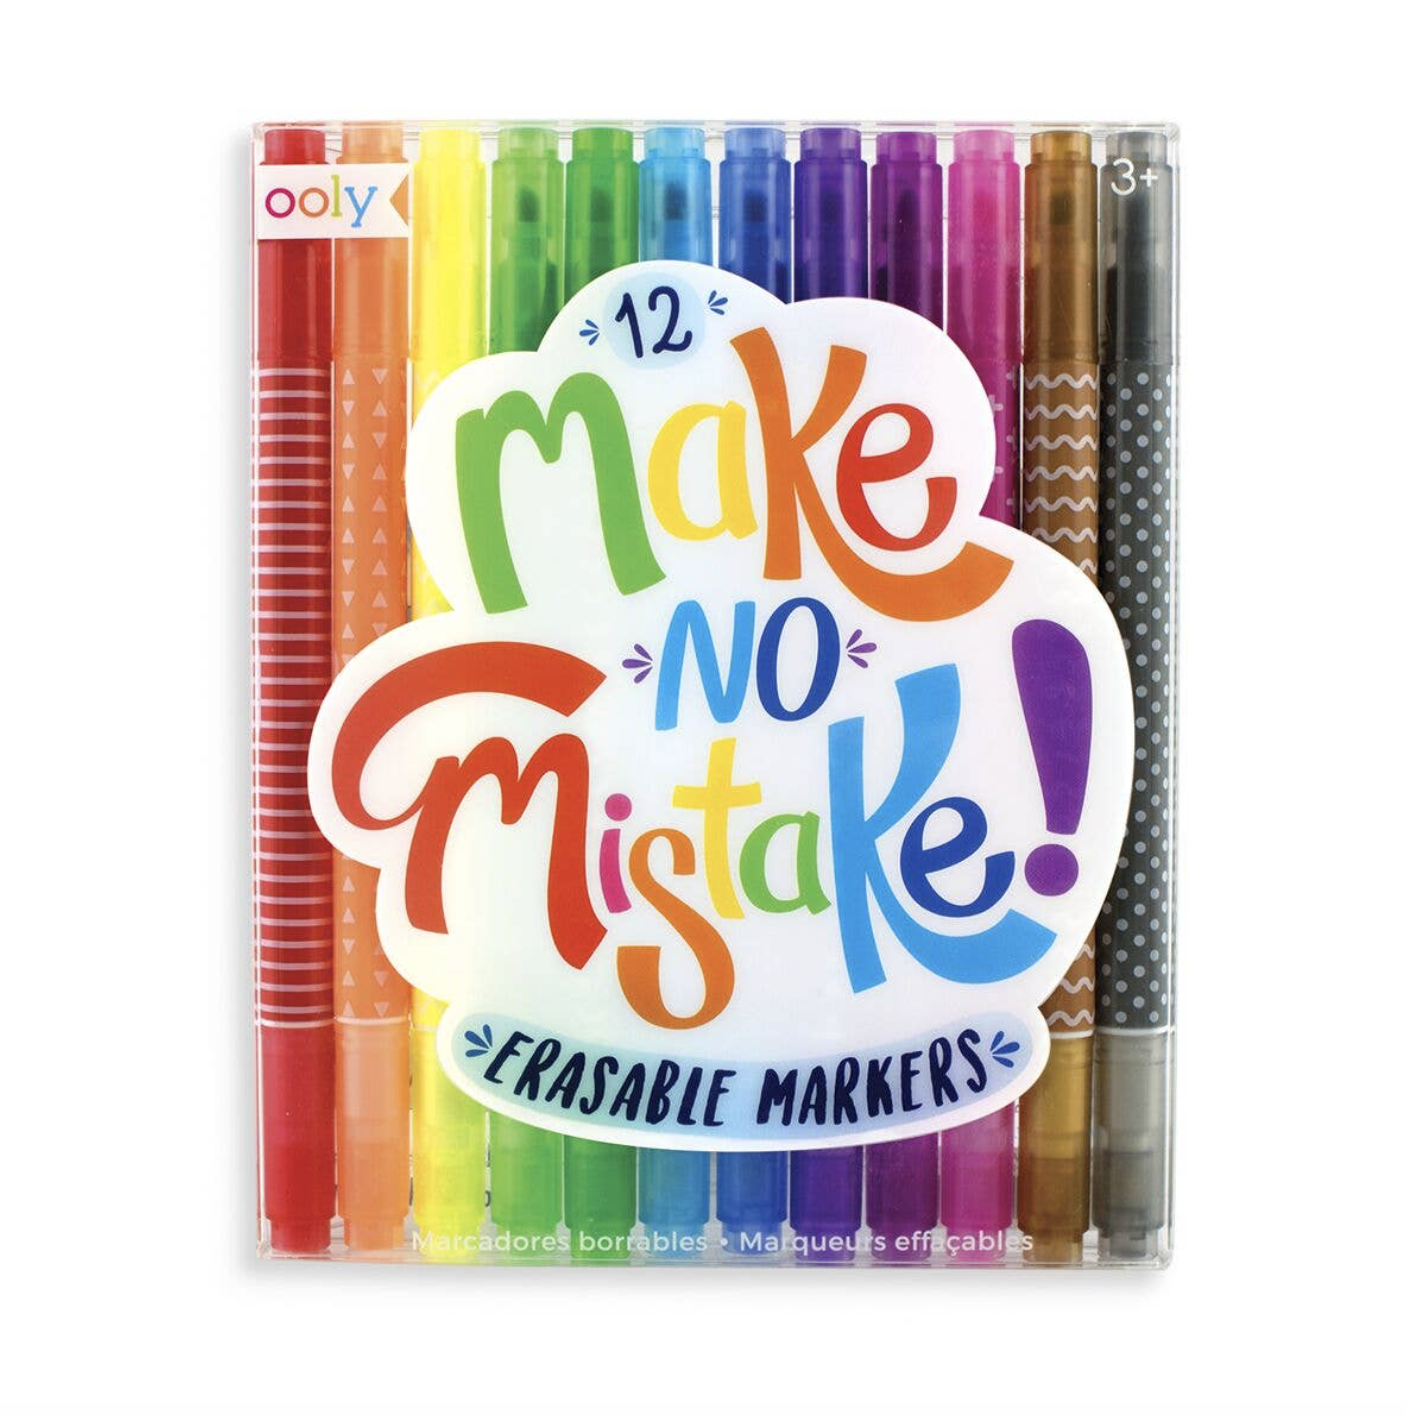 No Mistake, Erasable Markers